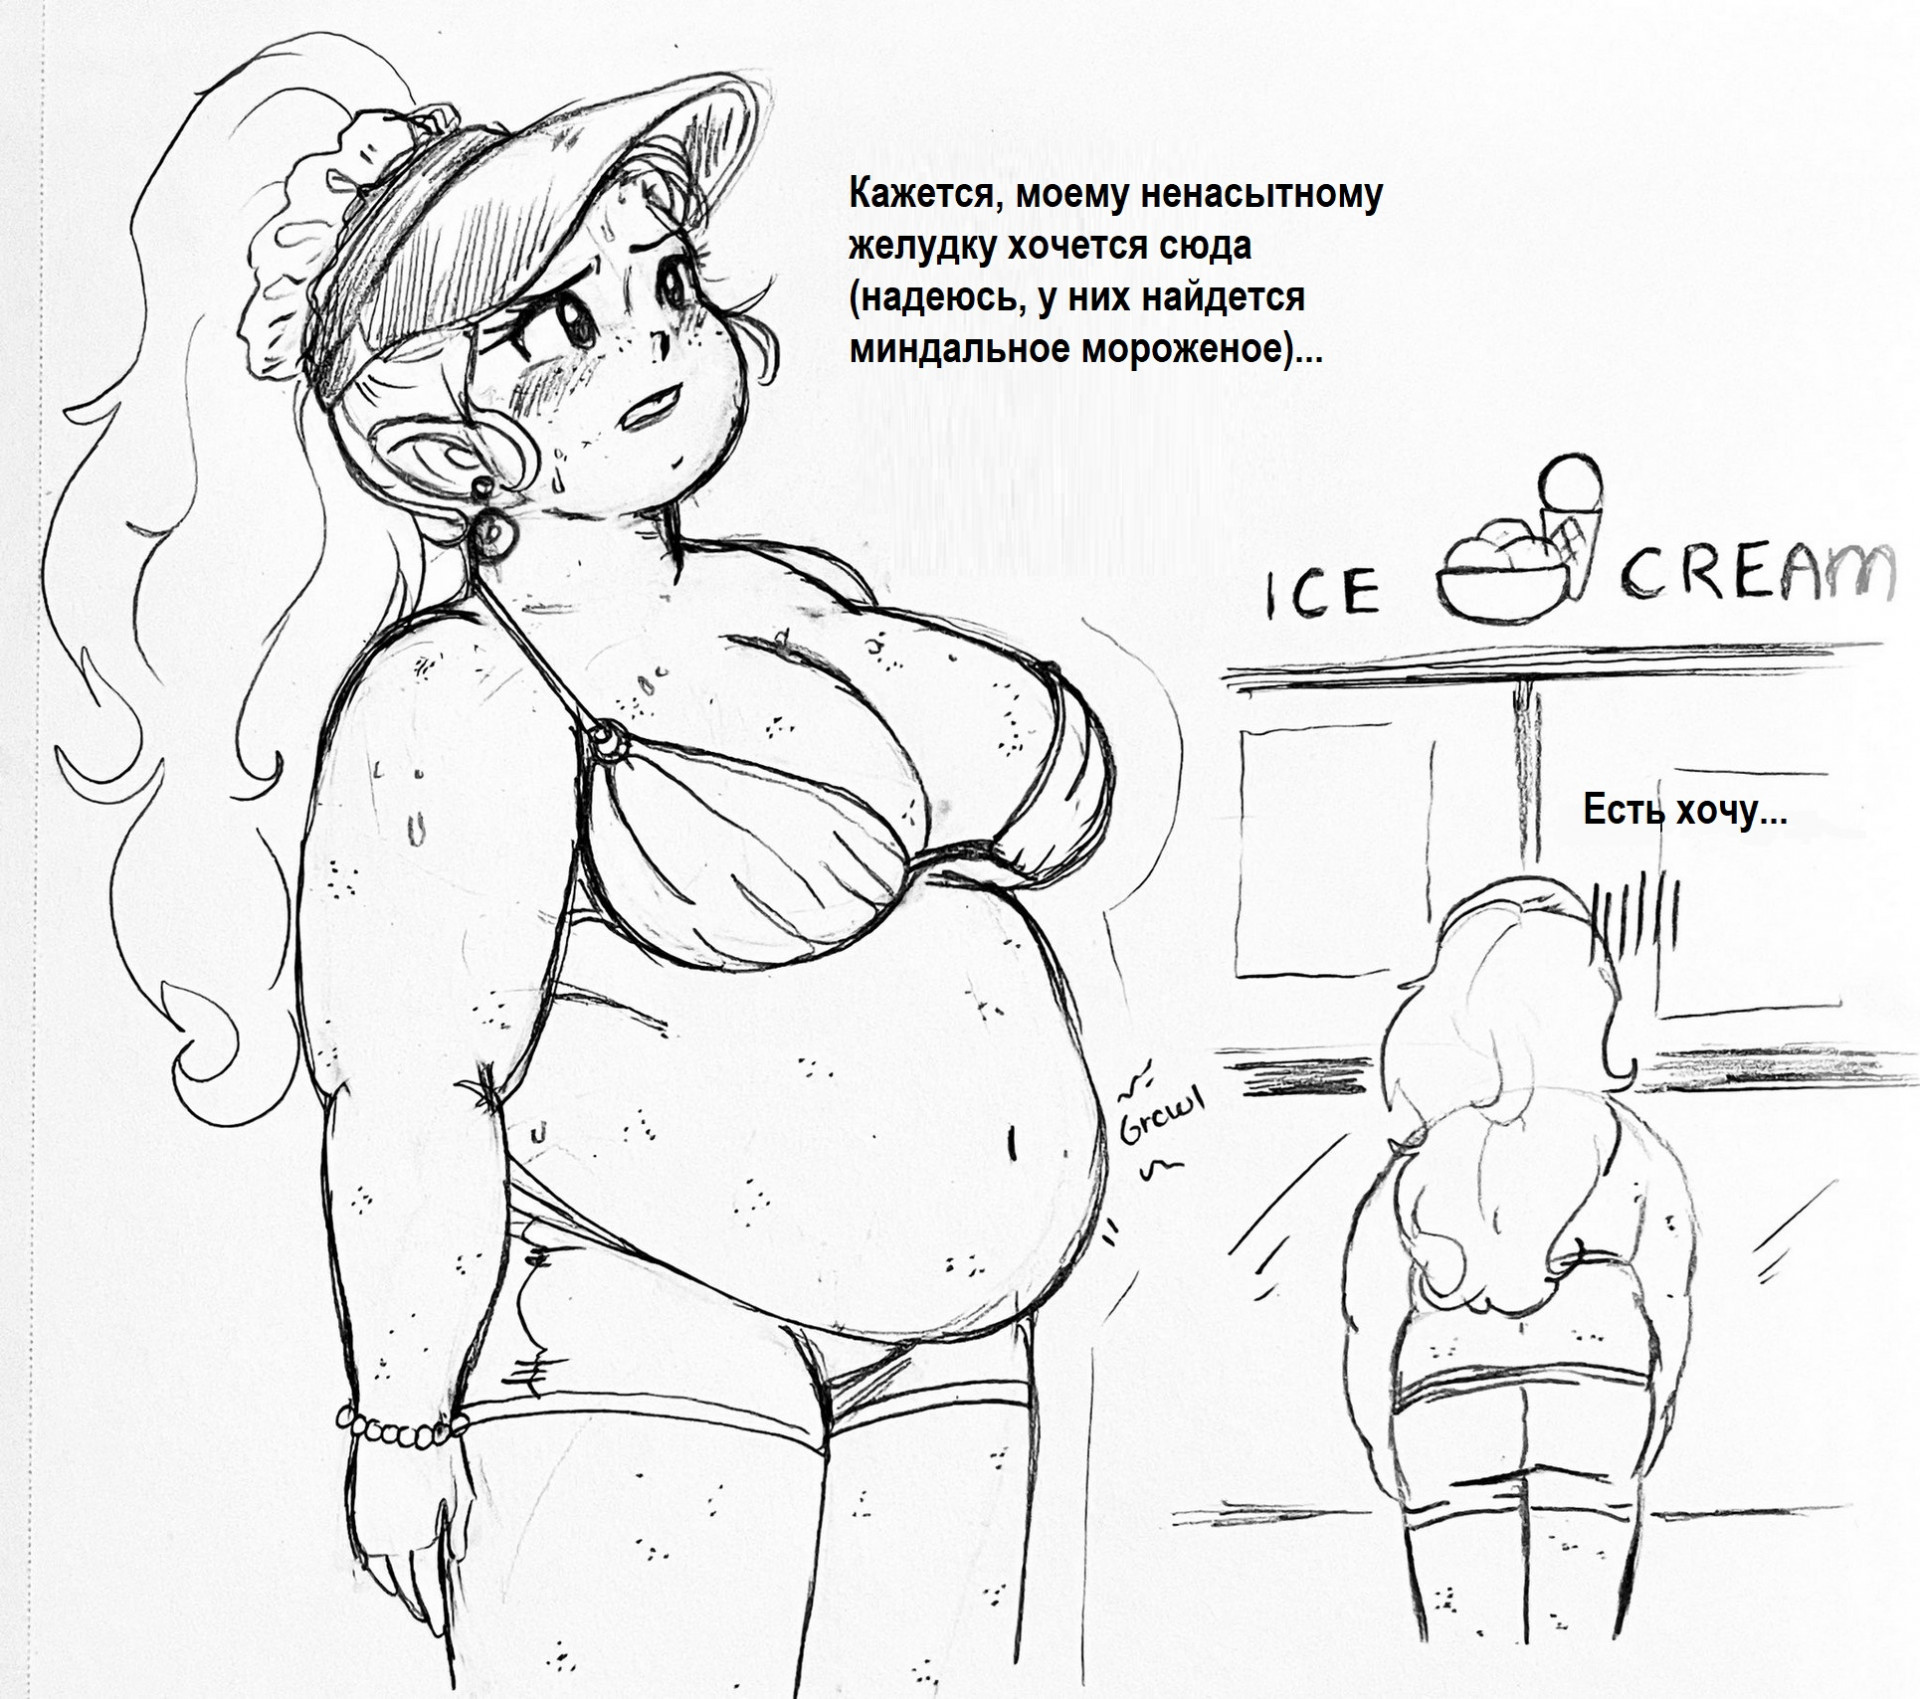 Сабина - на зов мороженого